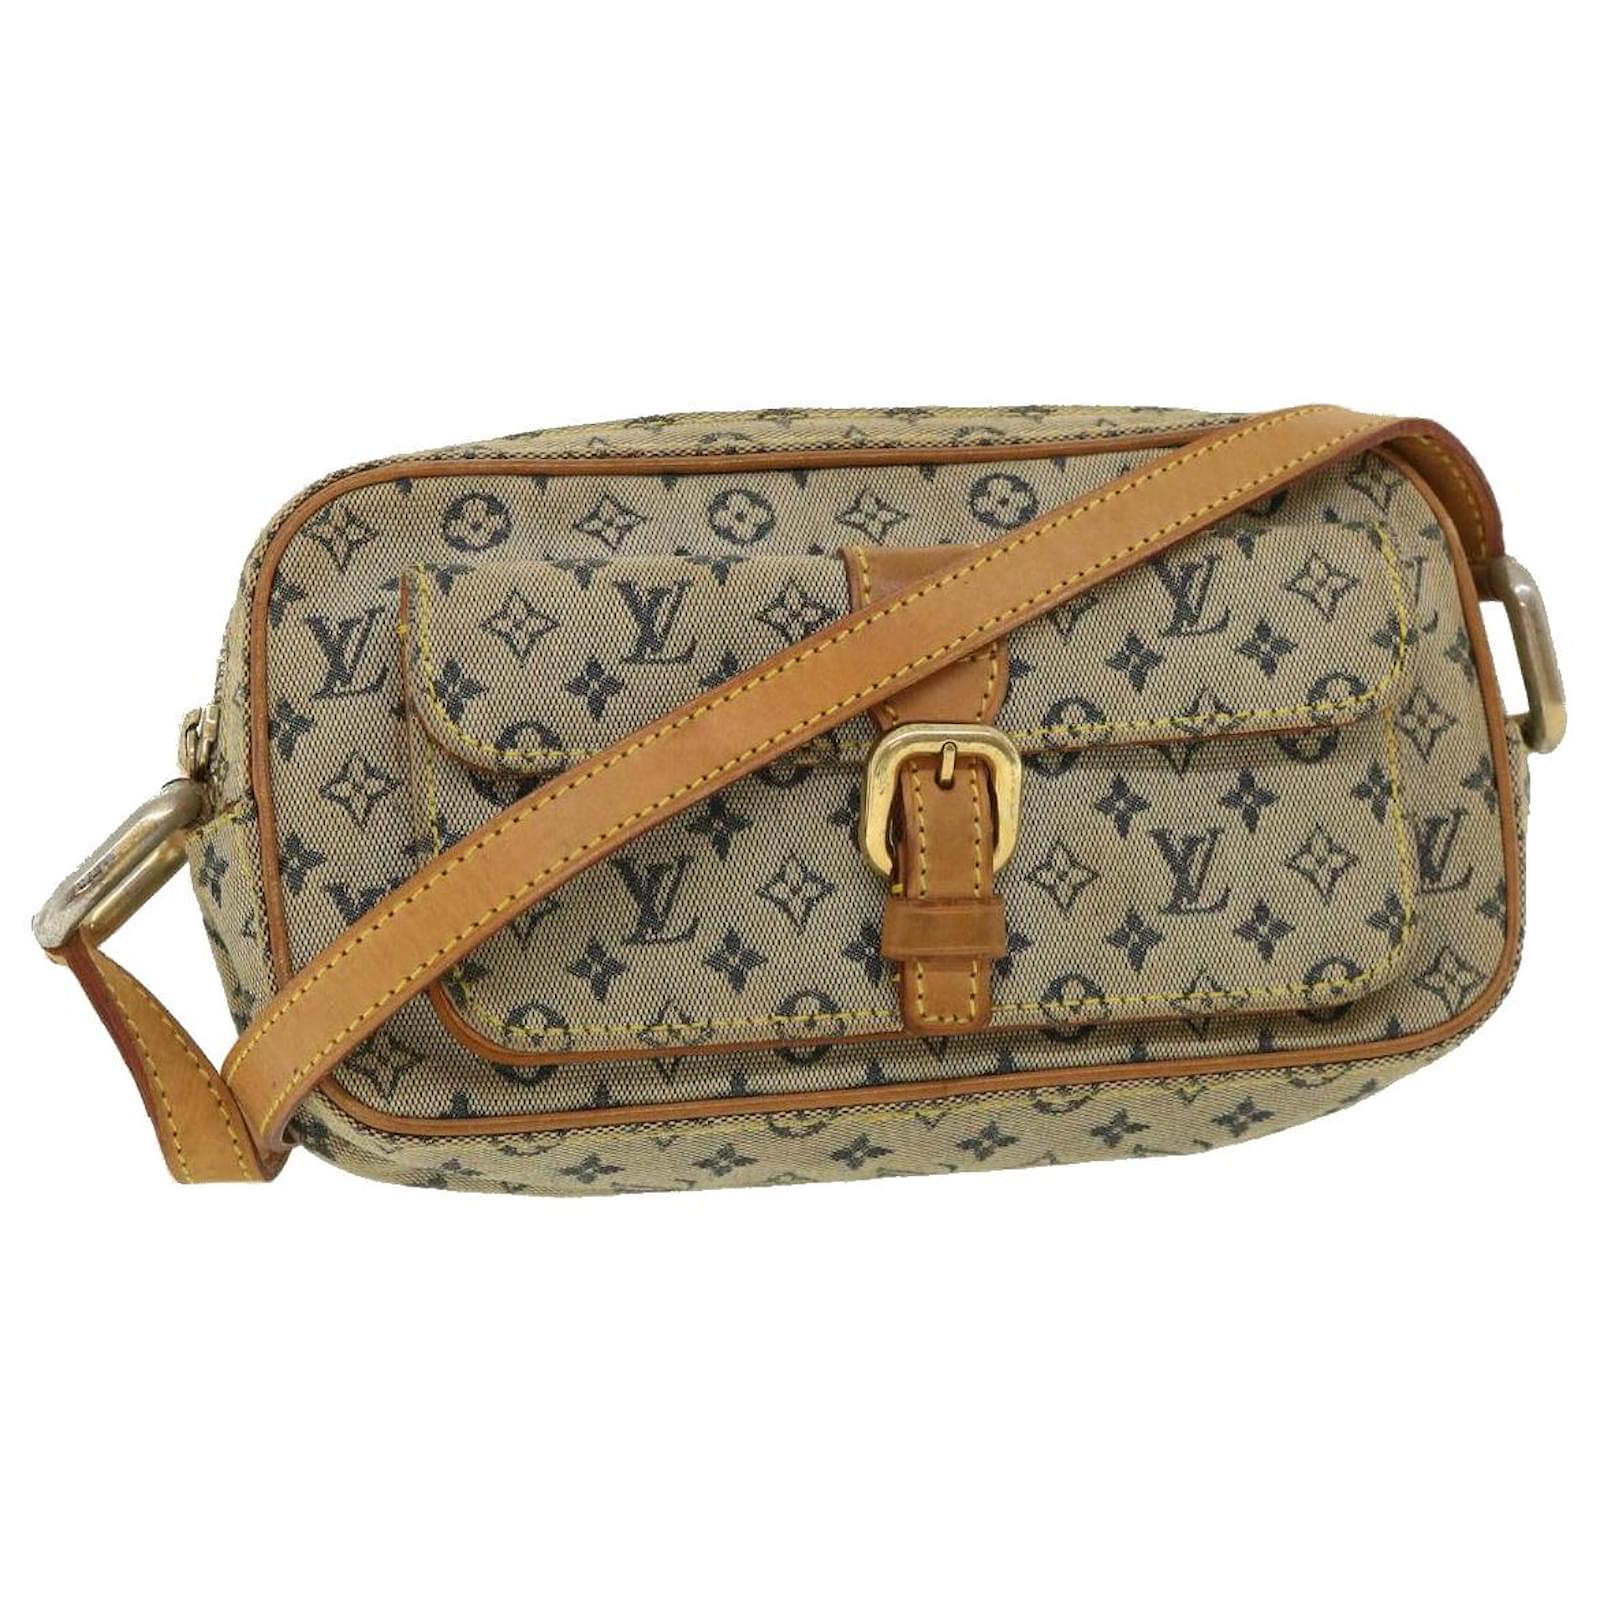 Juliette leather crossbody bag Louis Vuitton Multicolour in